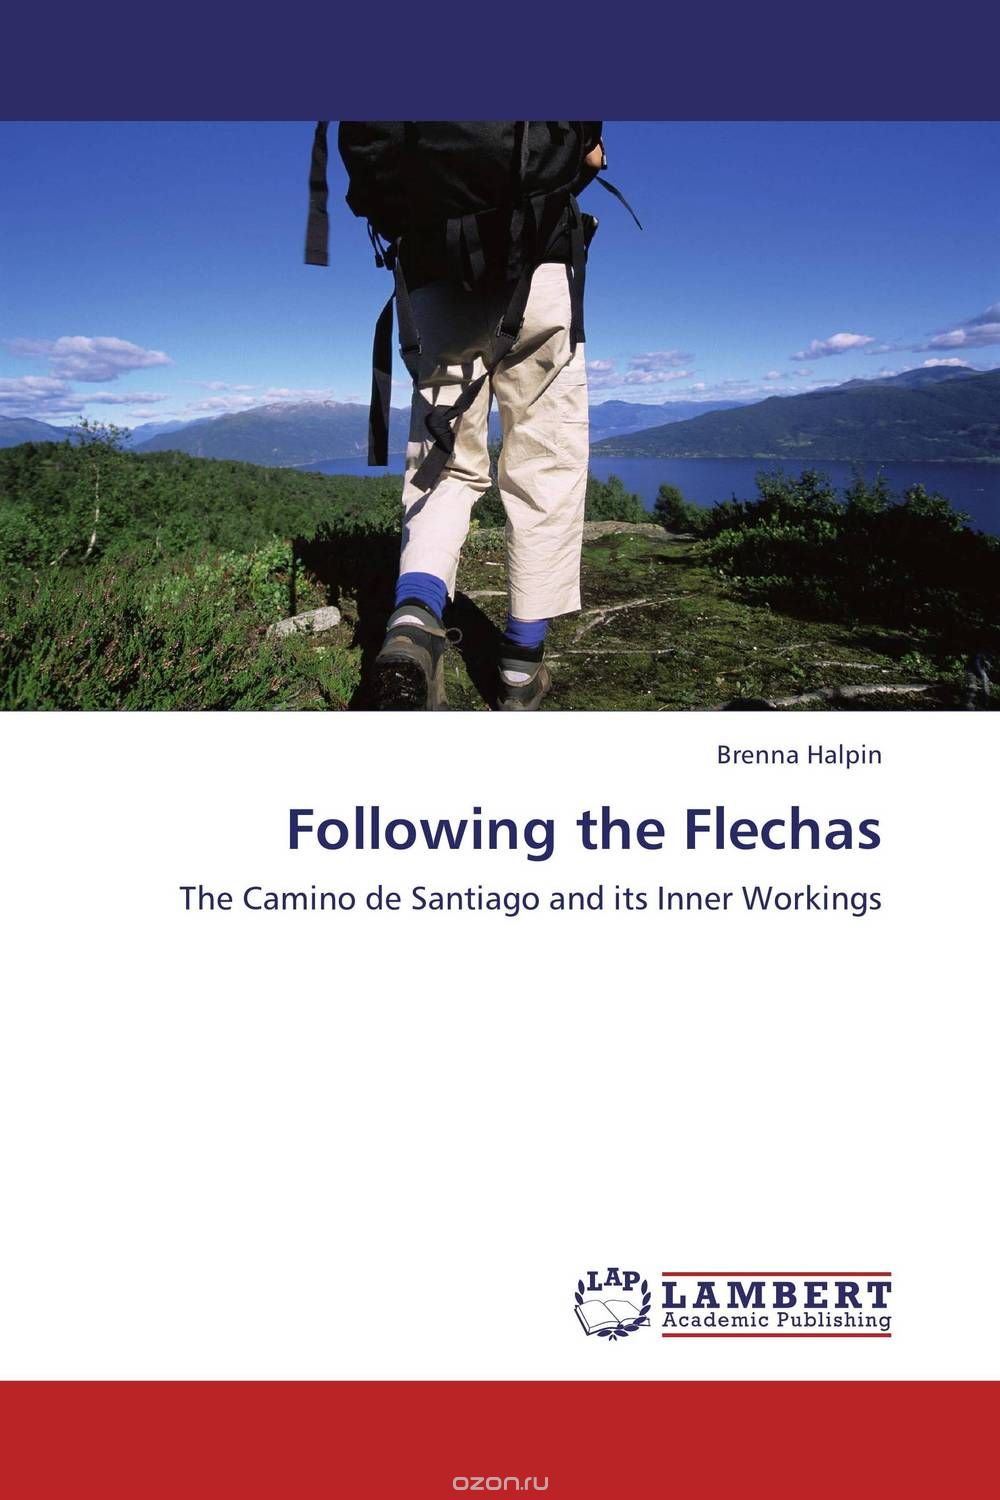 Following the Flechas